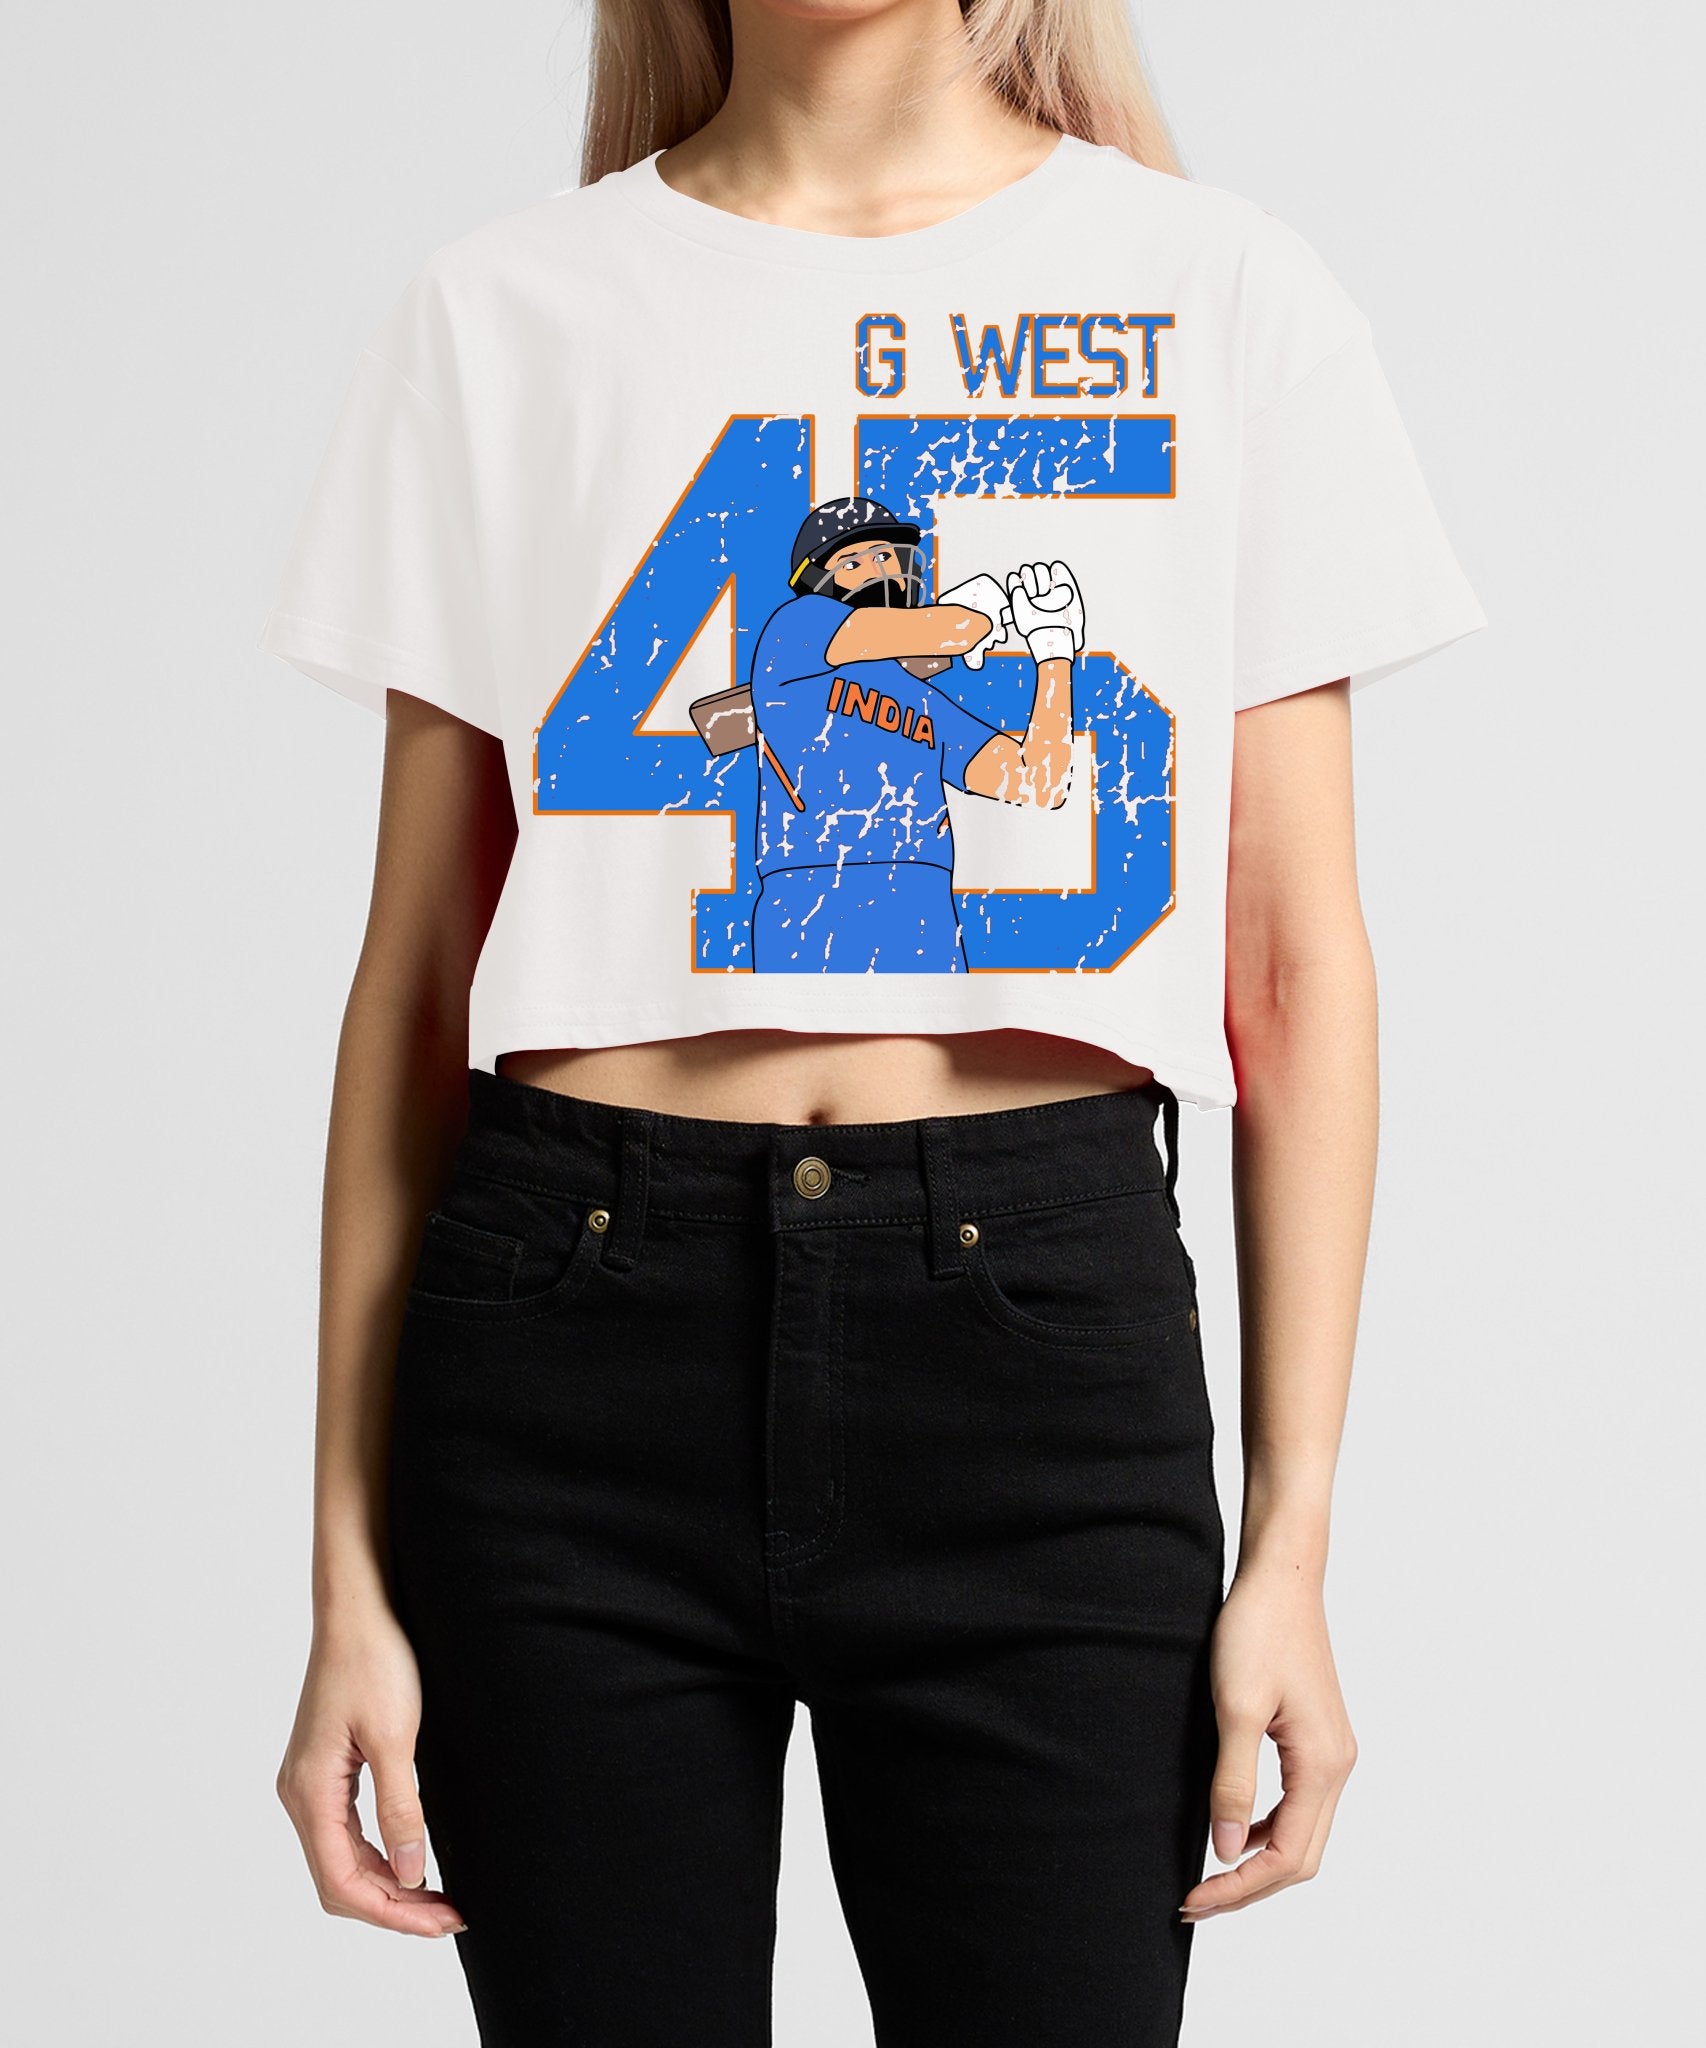 G West Women Cricket India King - 45 White Crop T - Shirt : GWWSCDTF2411 - G West